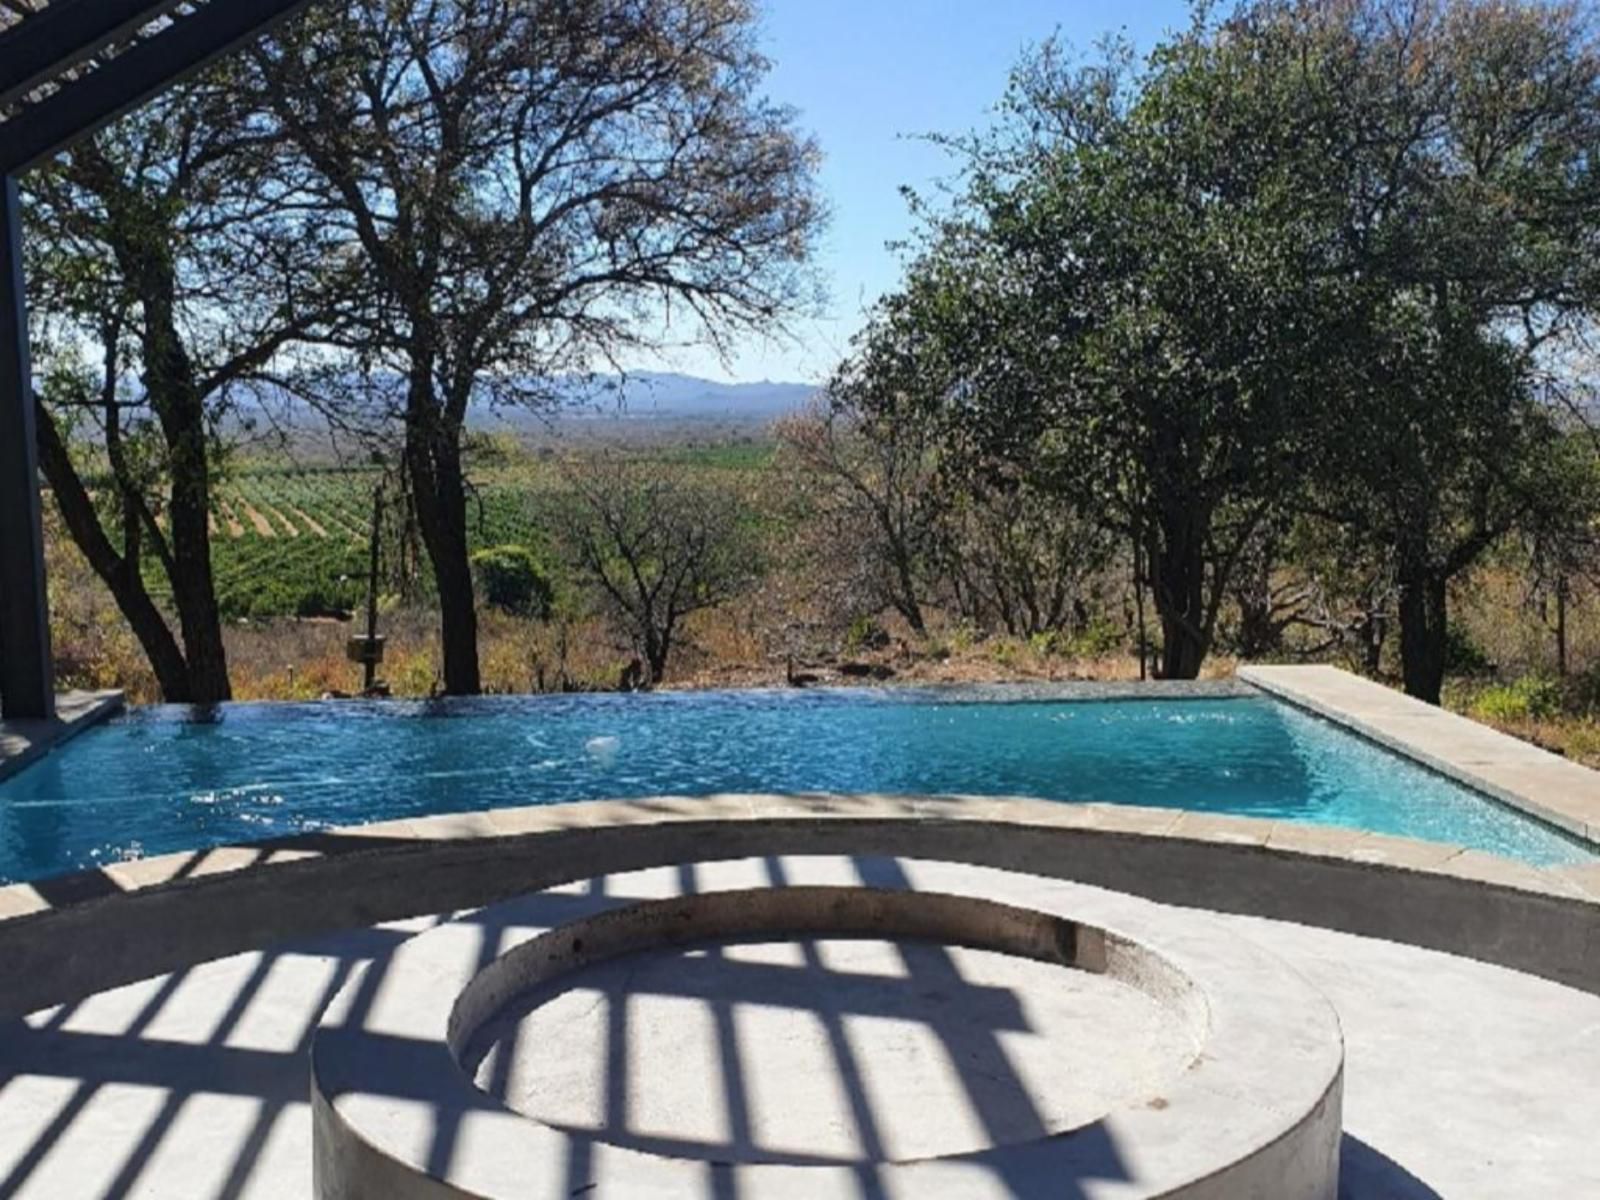 Via Lactea Moetladimo Limpopo Province South Africa Swimming Pool